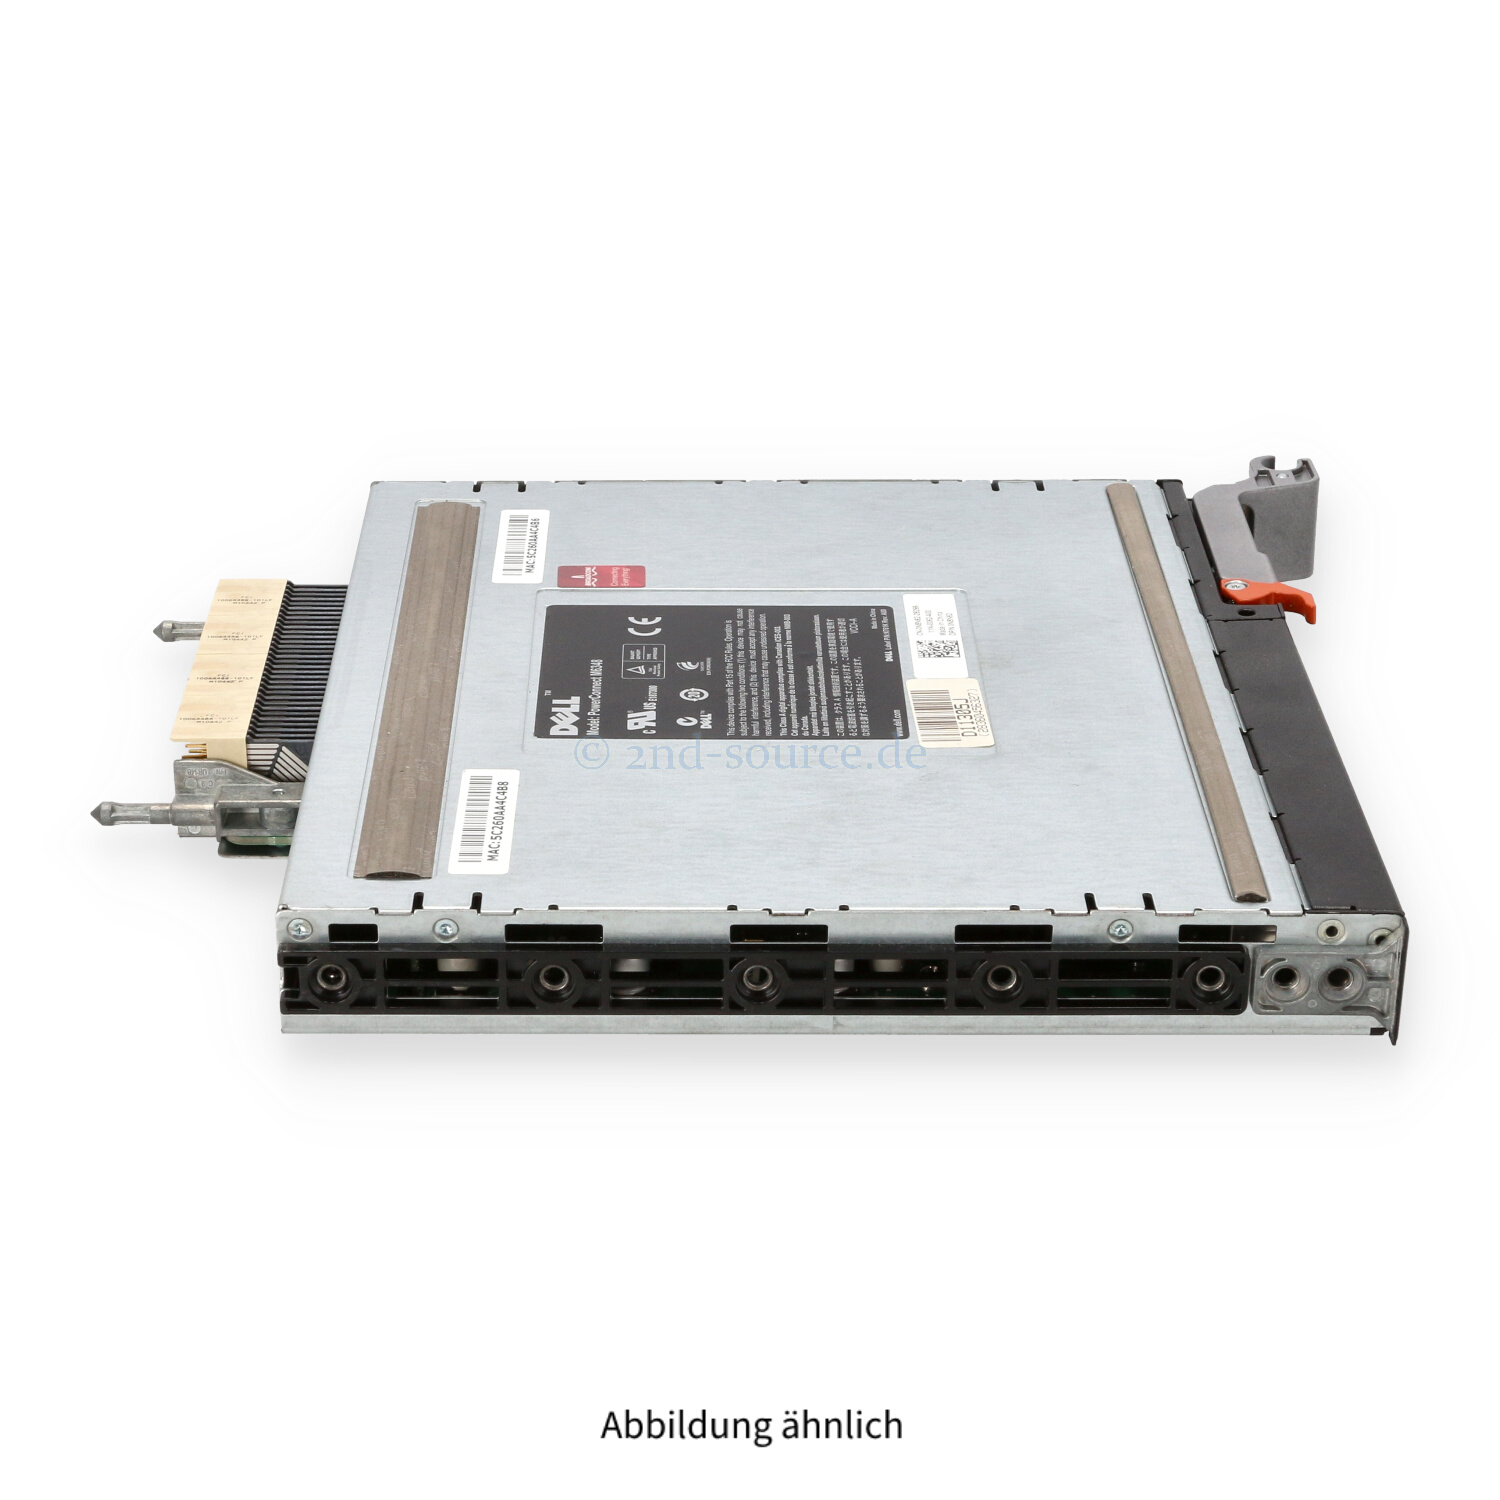 Dell PowerConnect M6348 1GbE / 10GbE Blade Switch Module M1000e N8N62 0N8N62